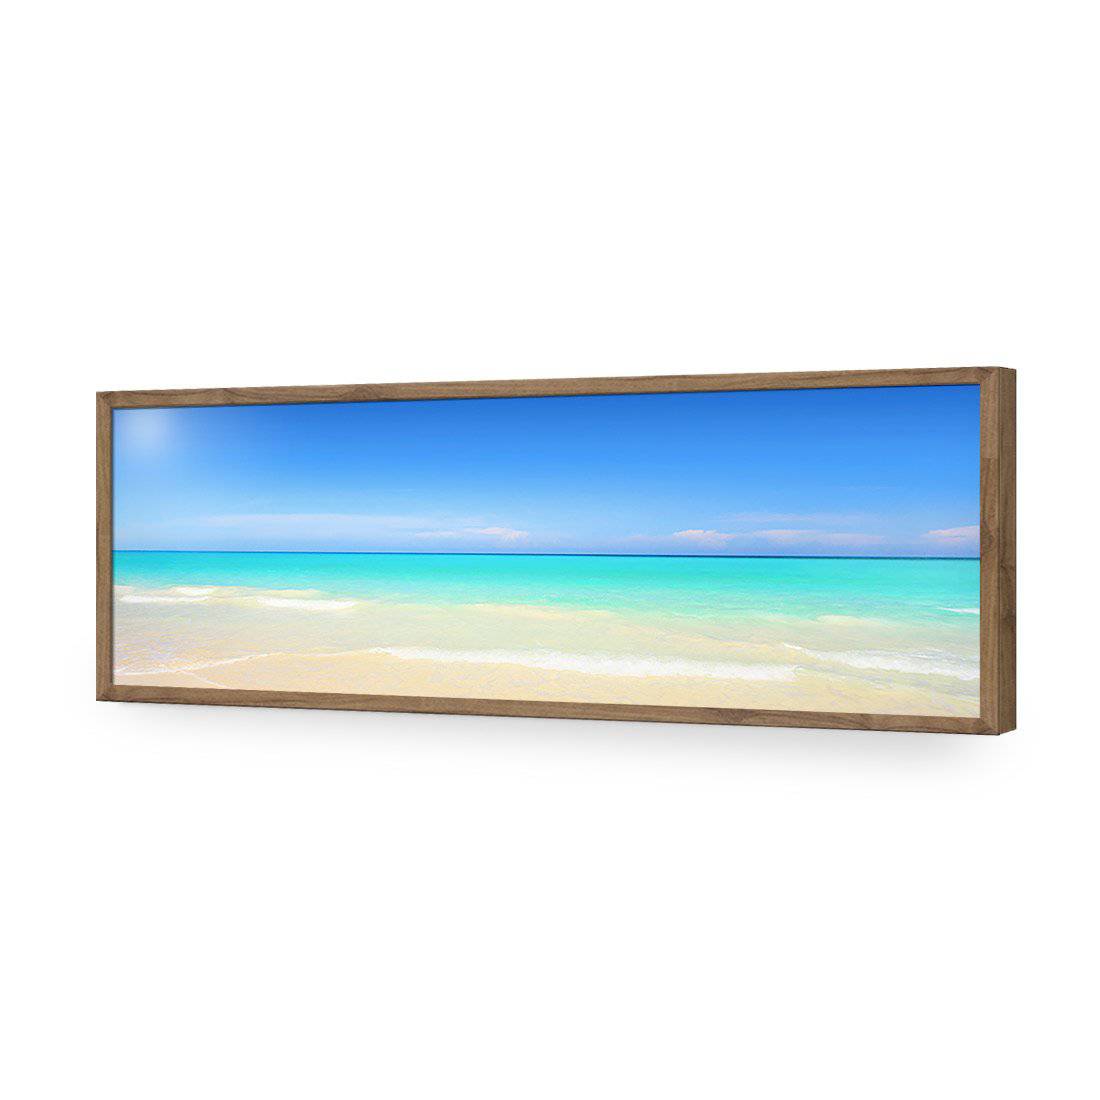 Paradise Beach, Long-Acrylic-Wall Art Design-Without Border-Acrylic - Natural Frame-60x20cm-Wall Art Designs